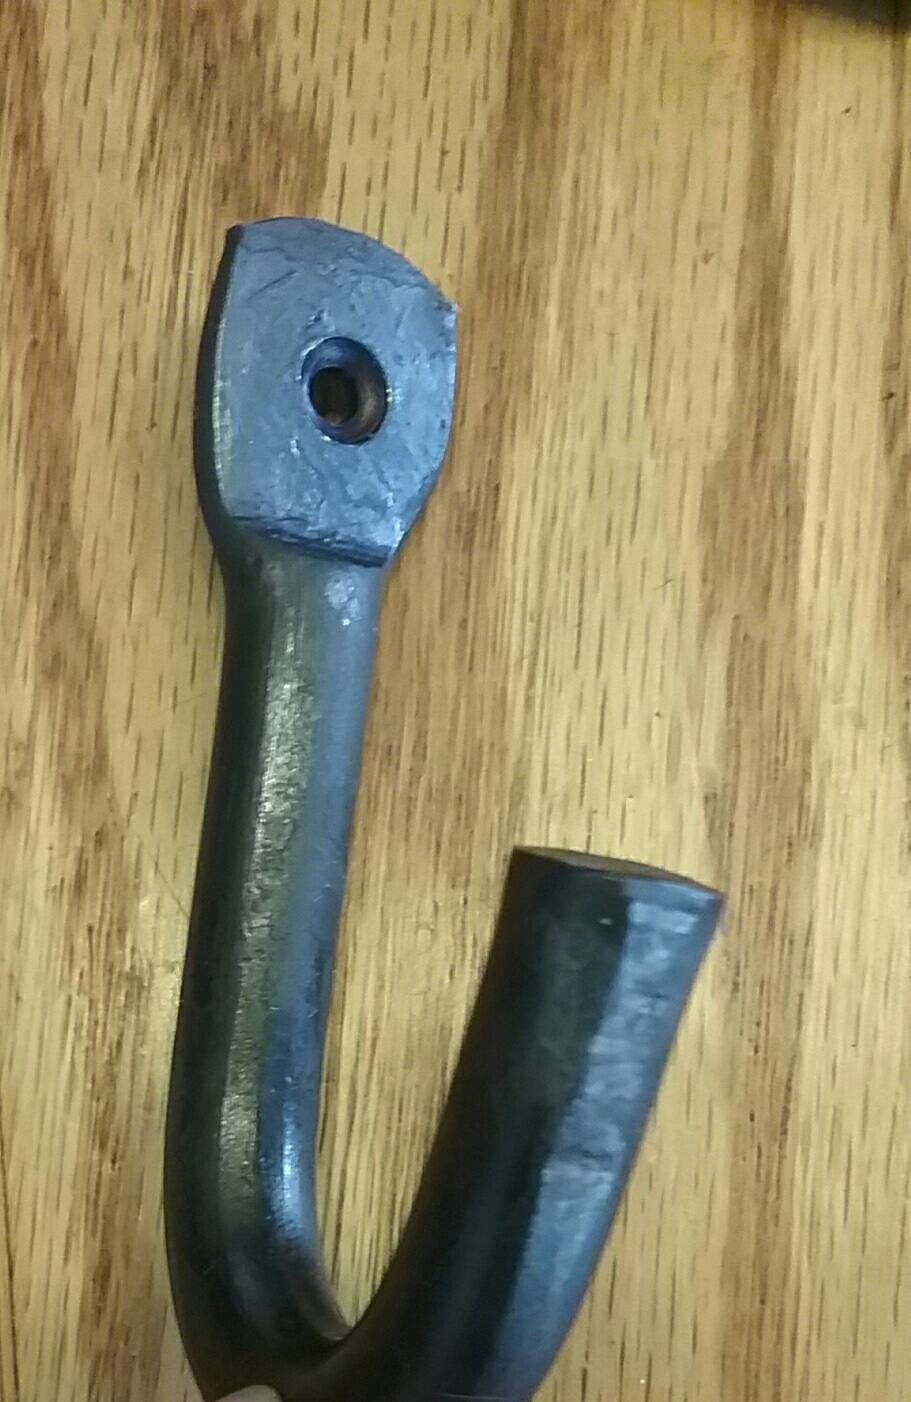 SCREW IN HOOK Cast Iron Screw Hook Antique Vintage Style Hooks